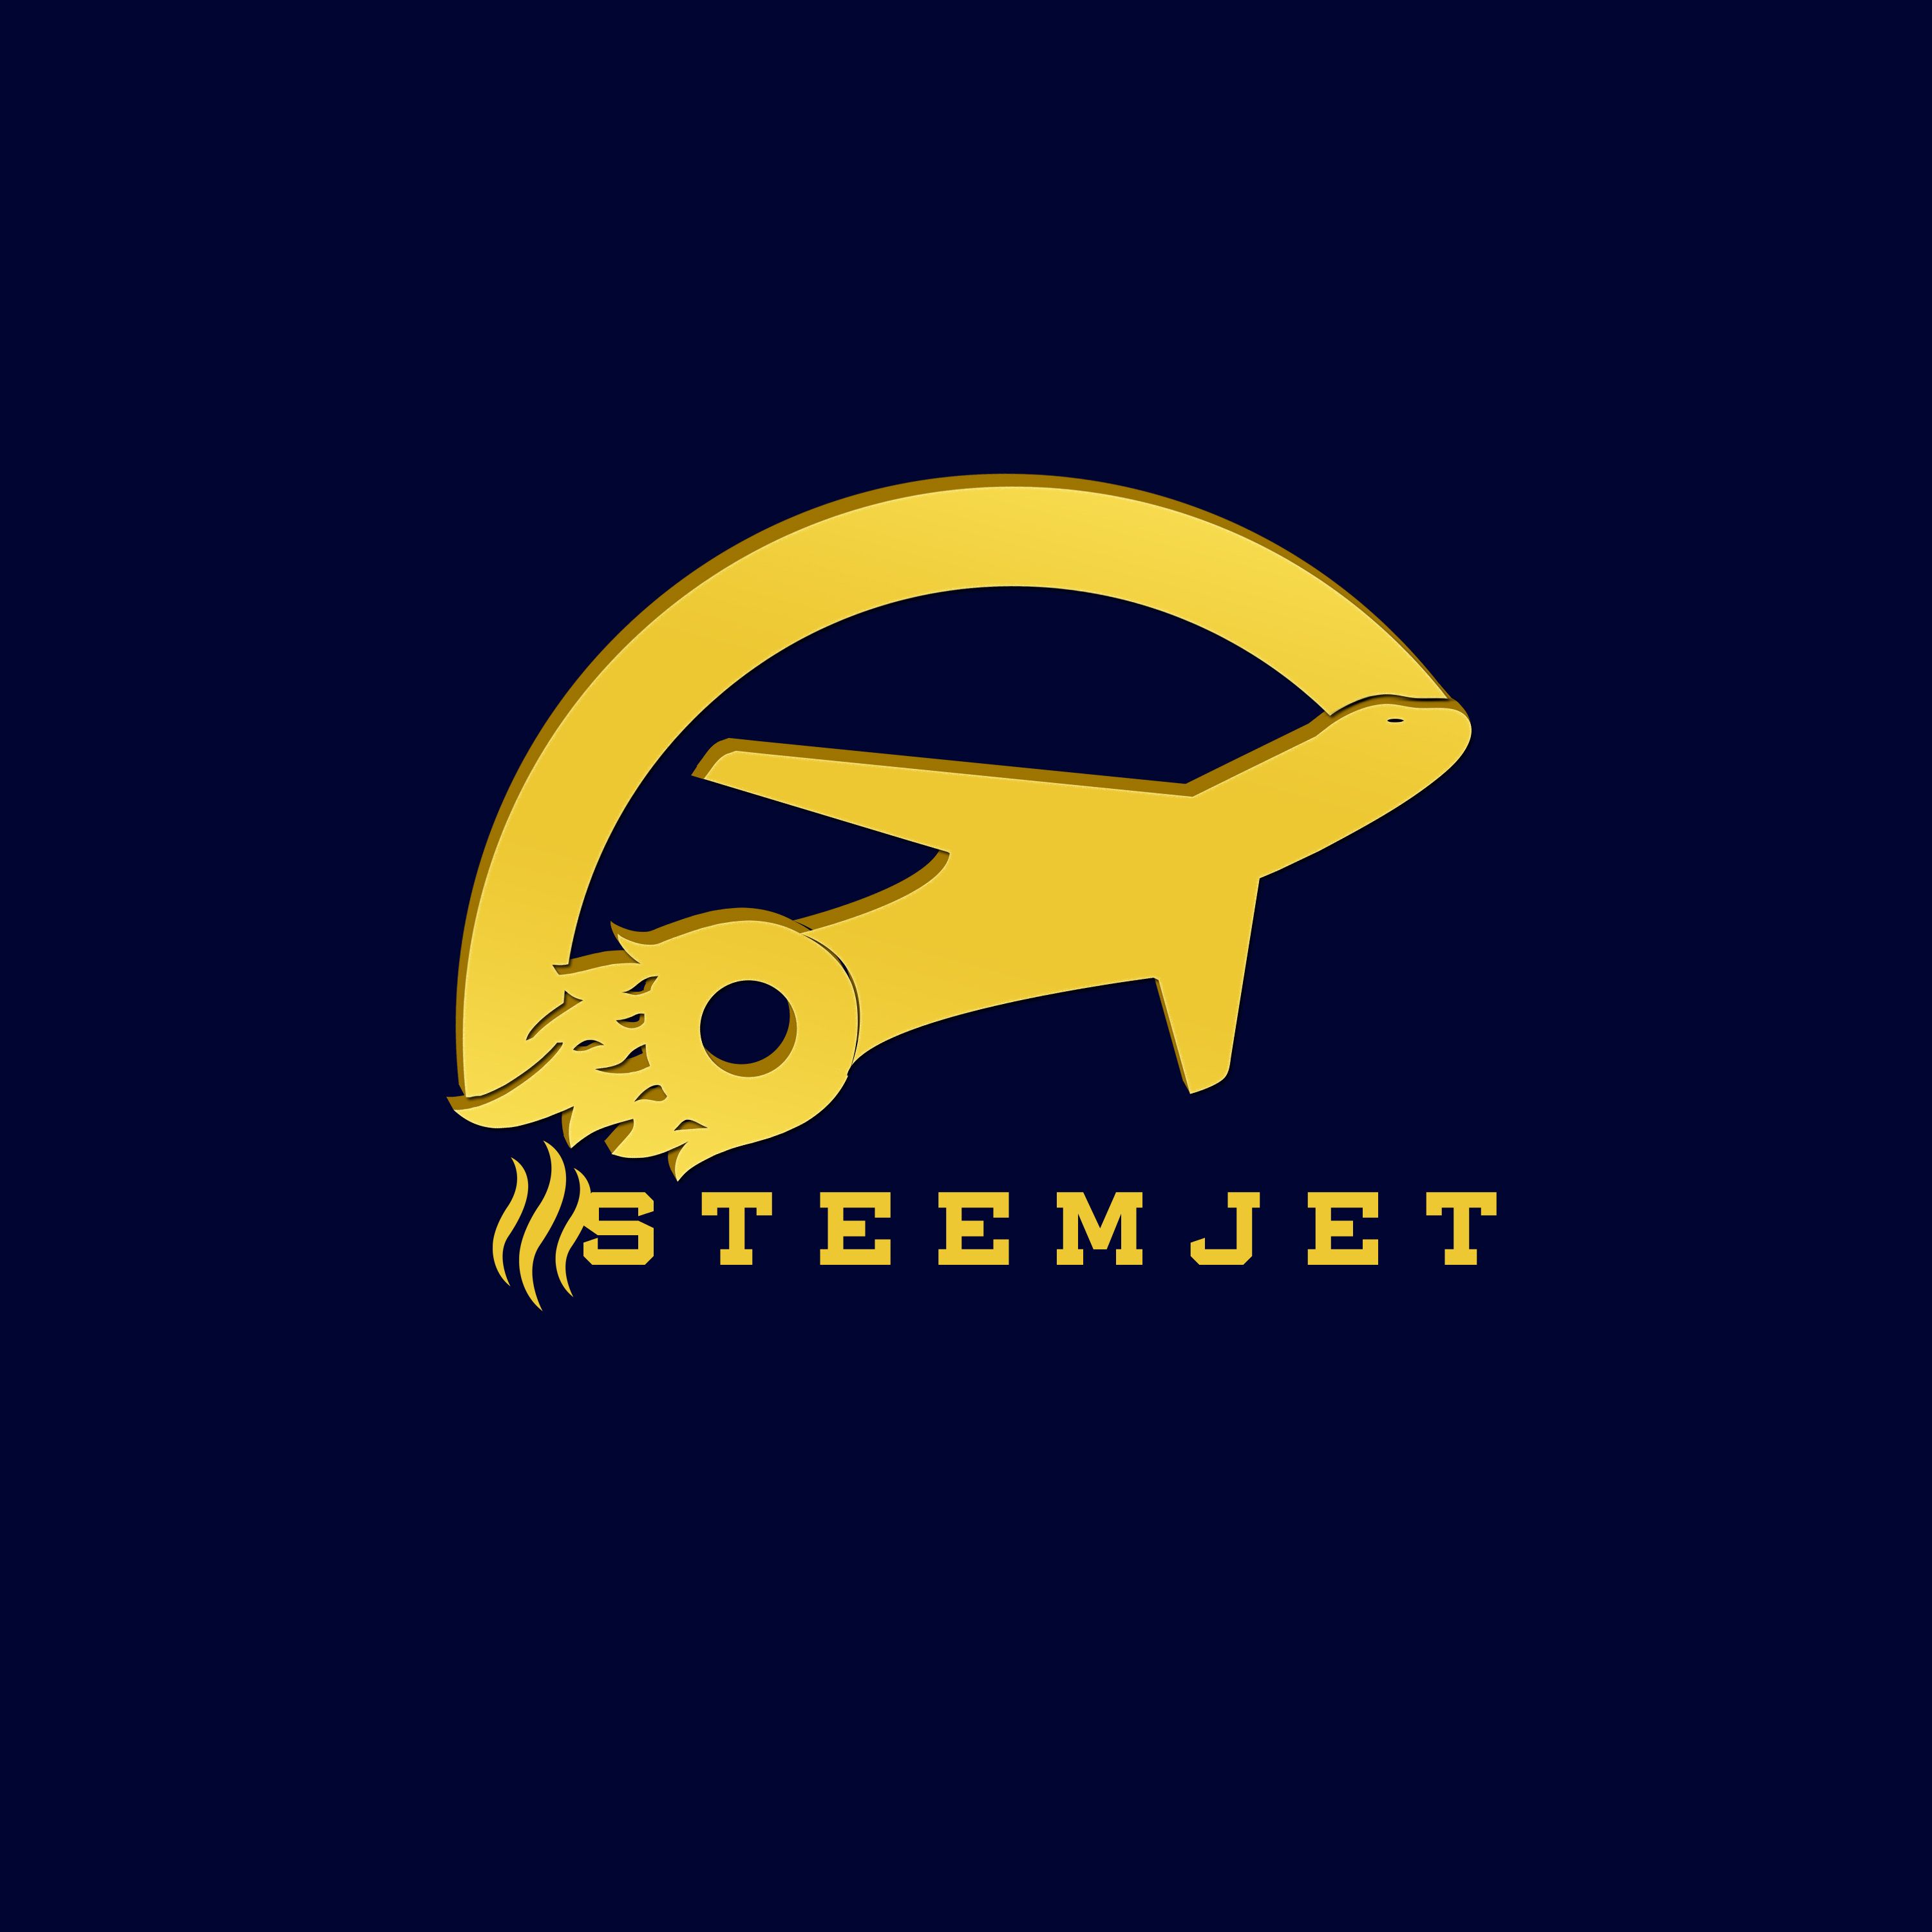 steemjet logo copy3D.jpg